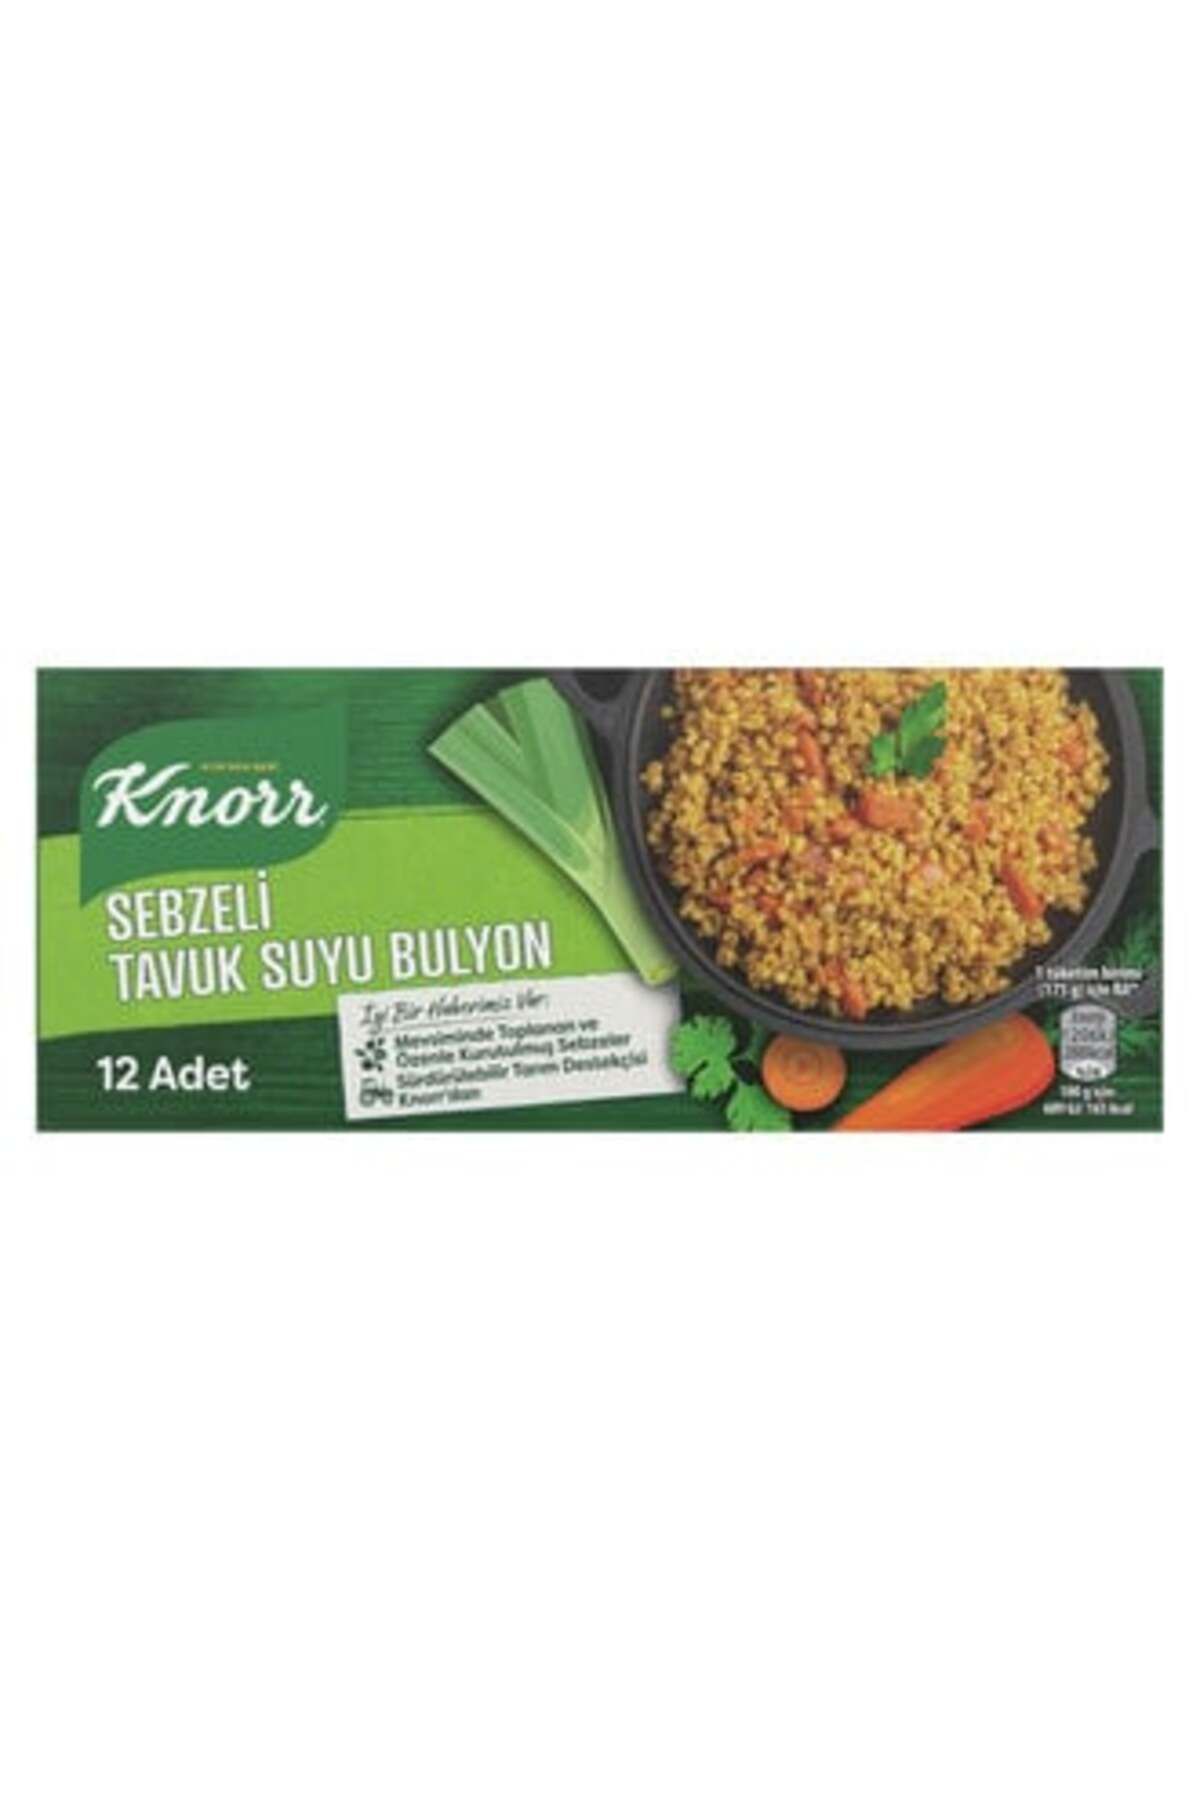 Knorr ( CİNO ÇİKOLATA ) Knorr Sebzeli Tavuk Suyu Bulyon 12 Adet 120 Gr ( 2 ADET )